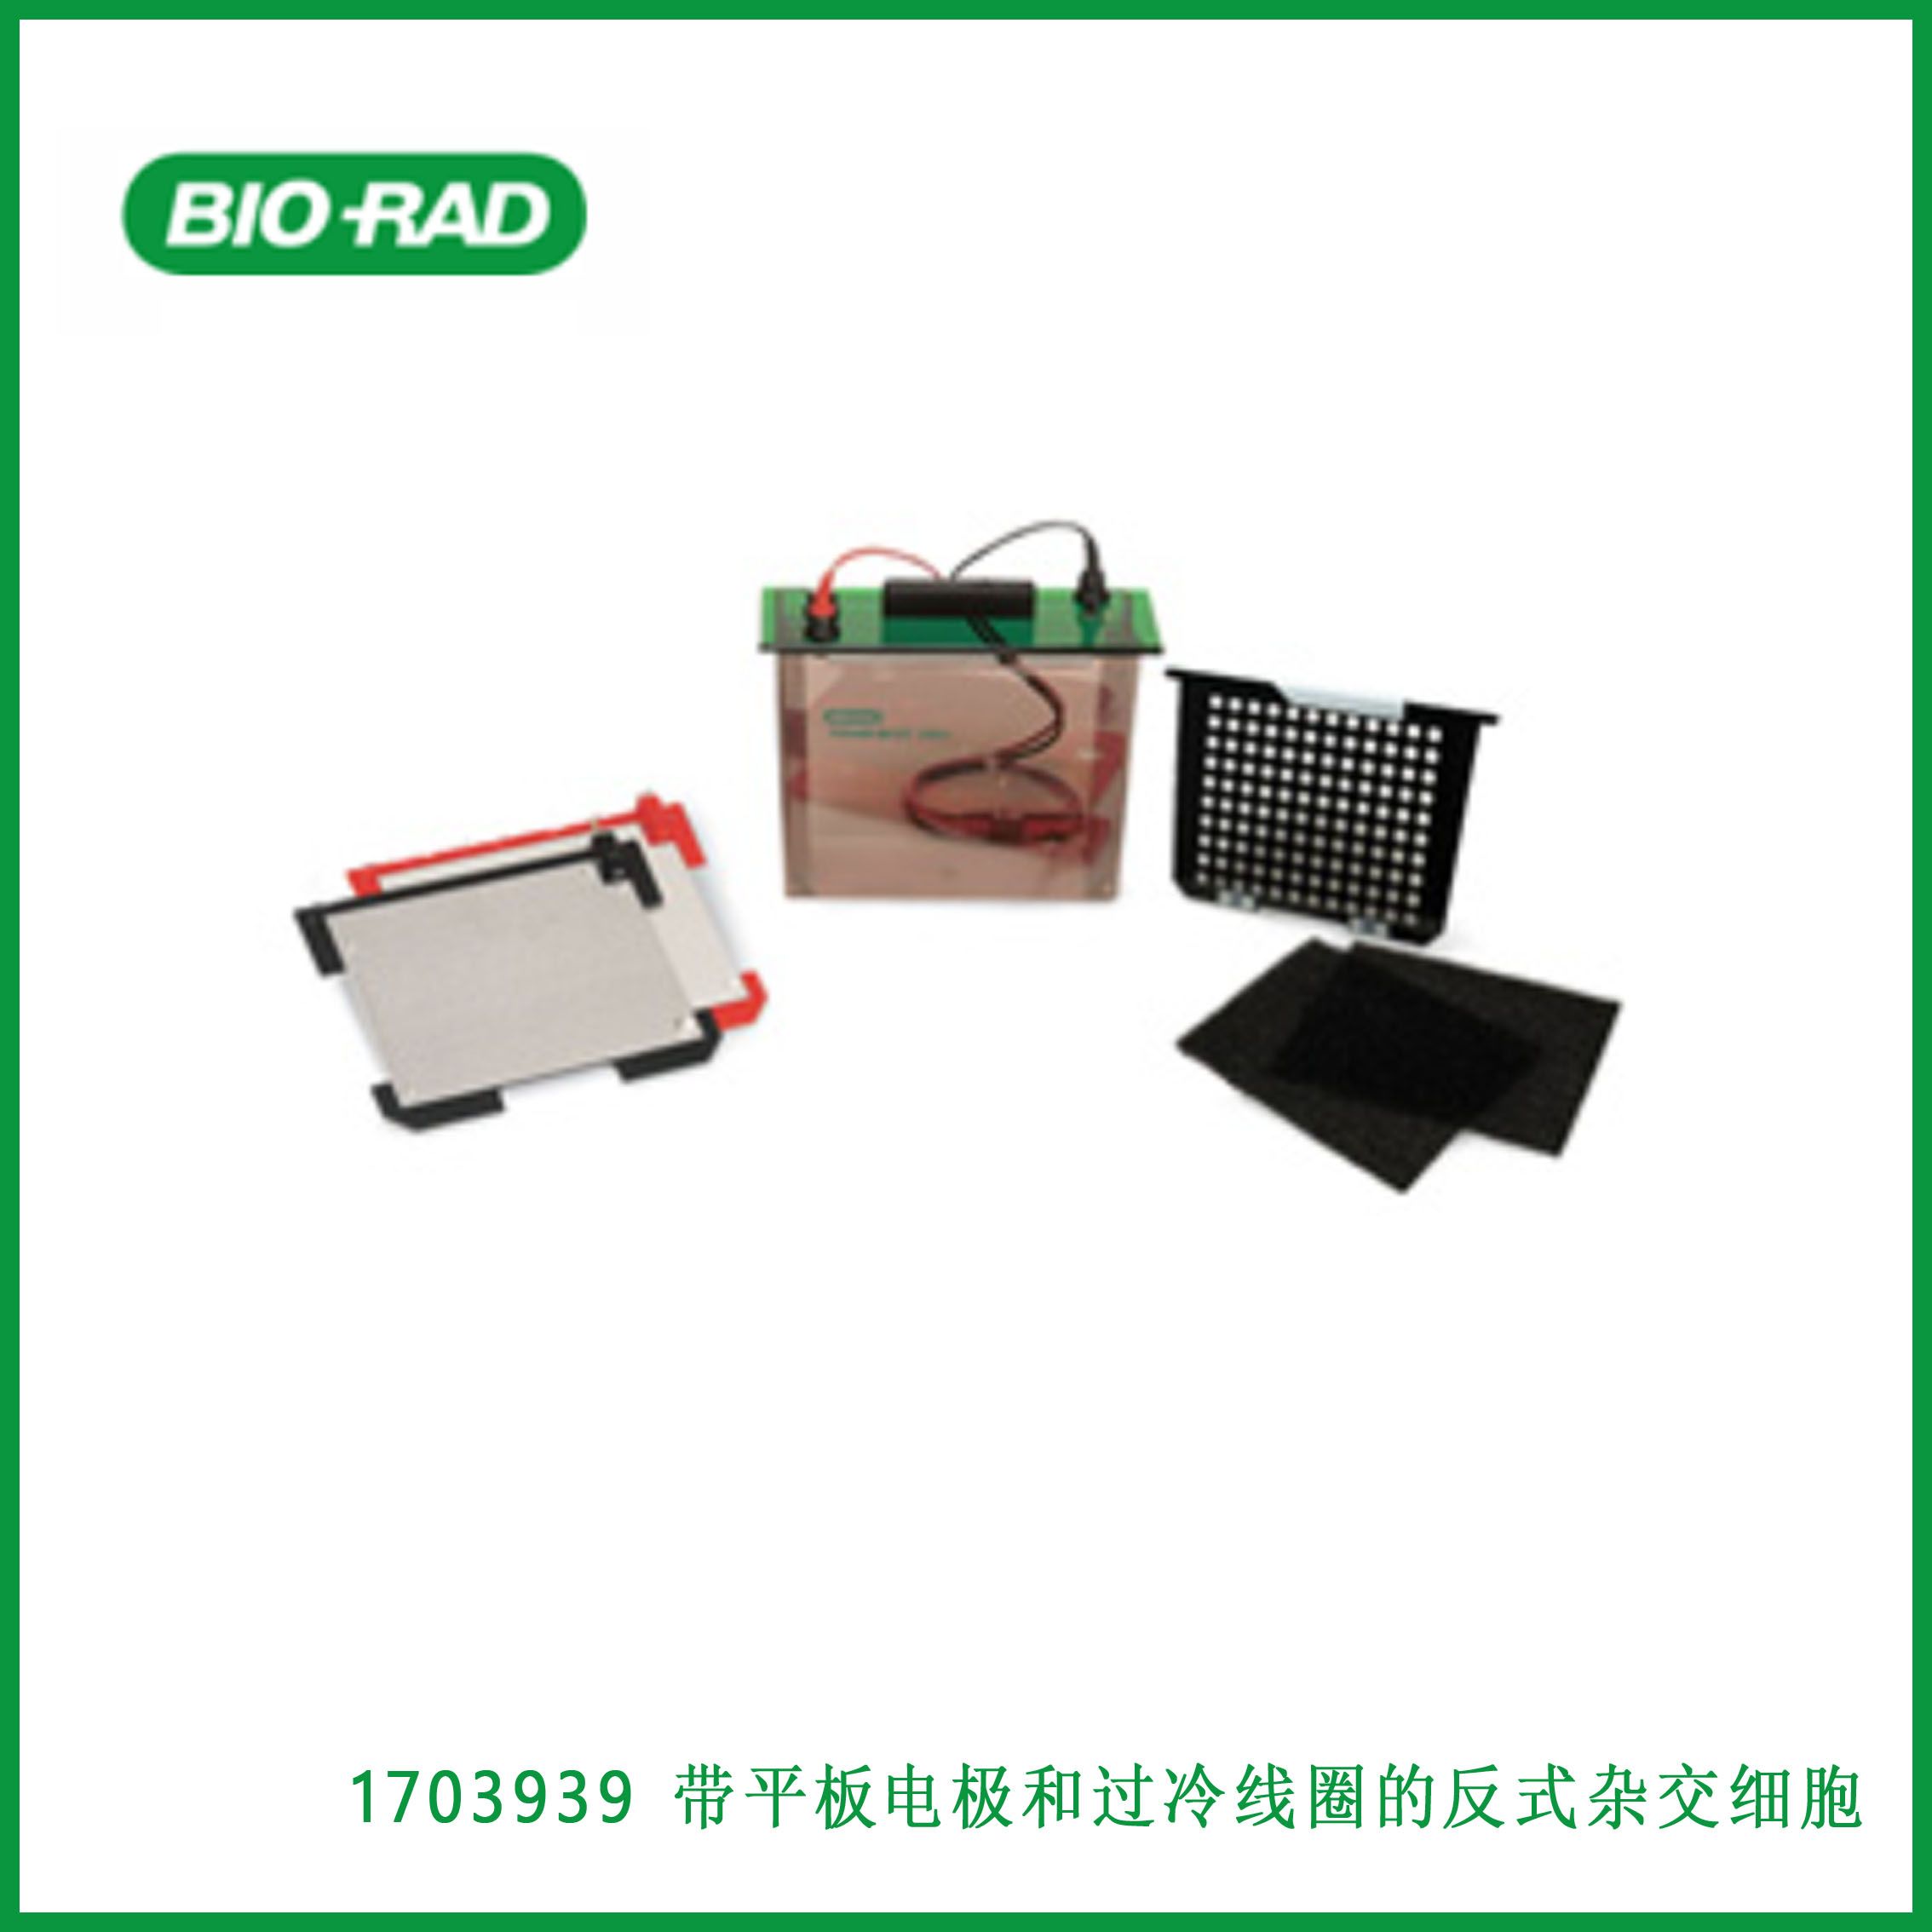 伯乐Bio-Rad1703939 Trans-Blot Cell With Plate Electrodes and Super Cooling Coil，带平板电极和过冷线圈的反式杂交细胞，现货